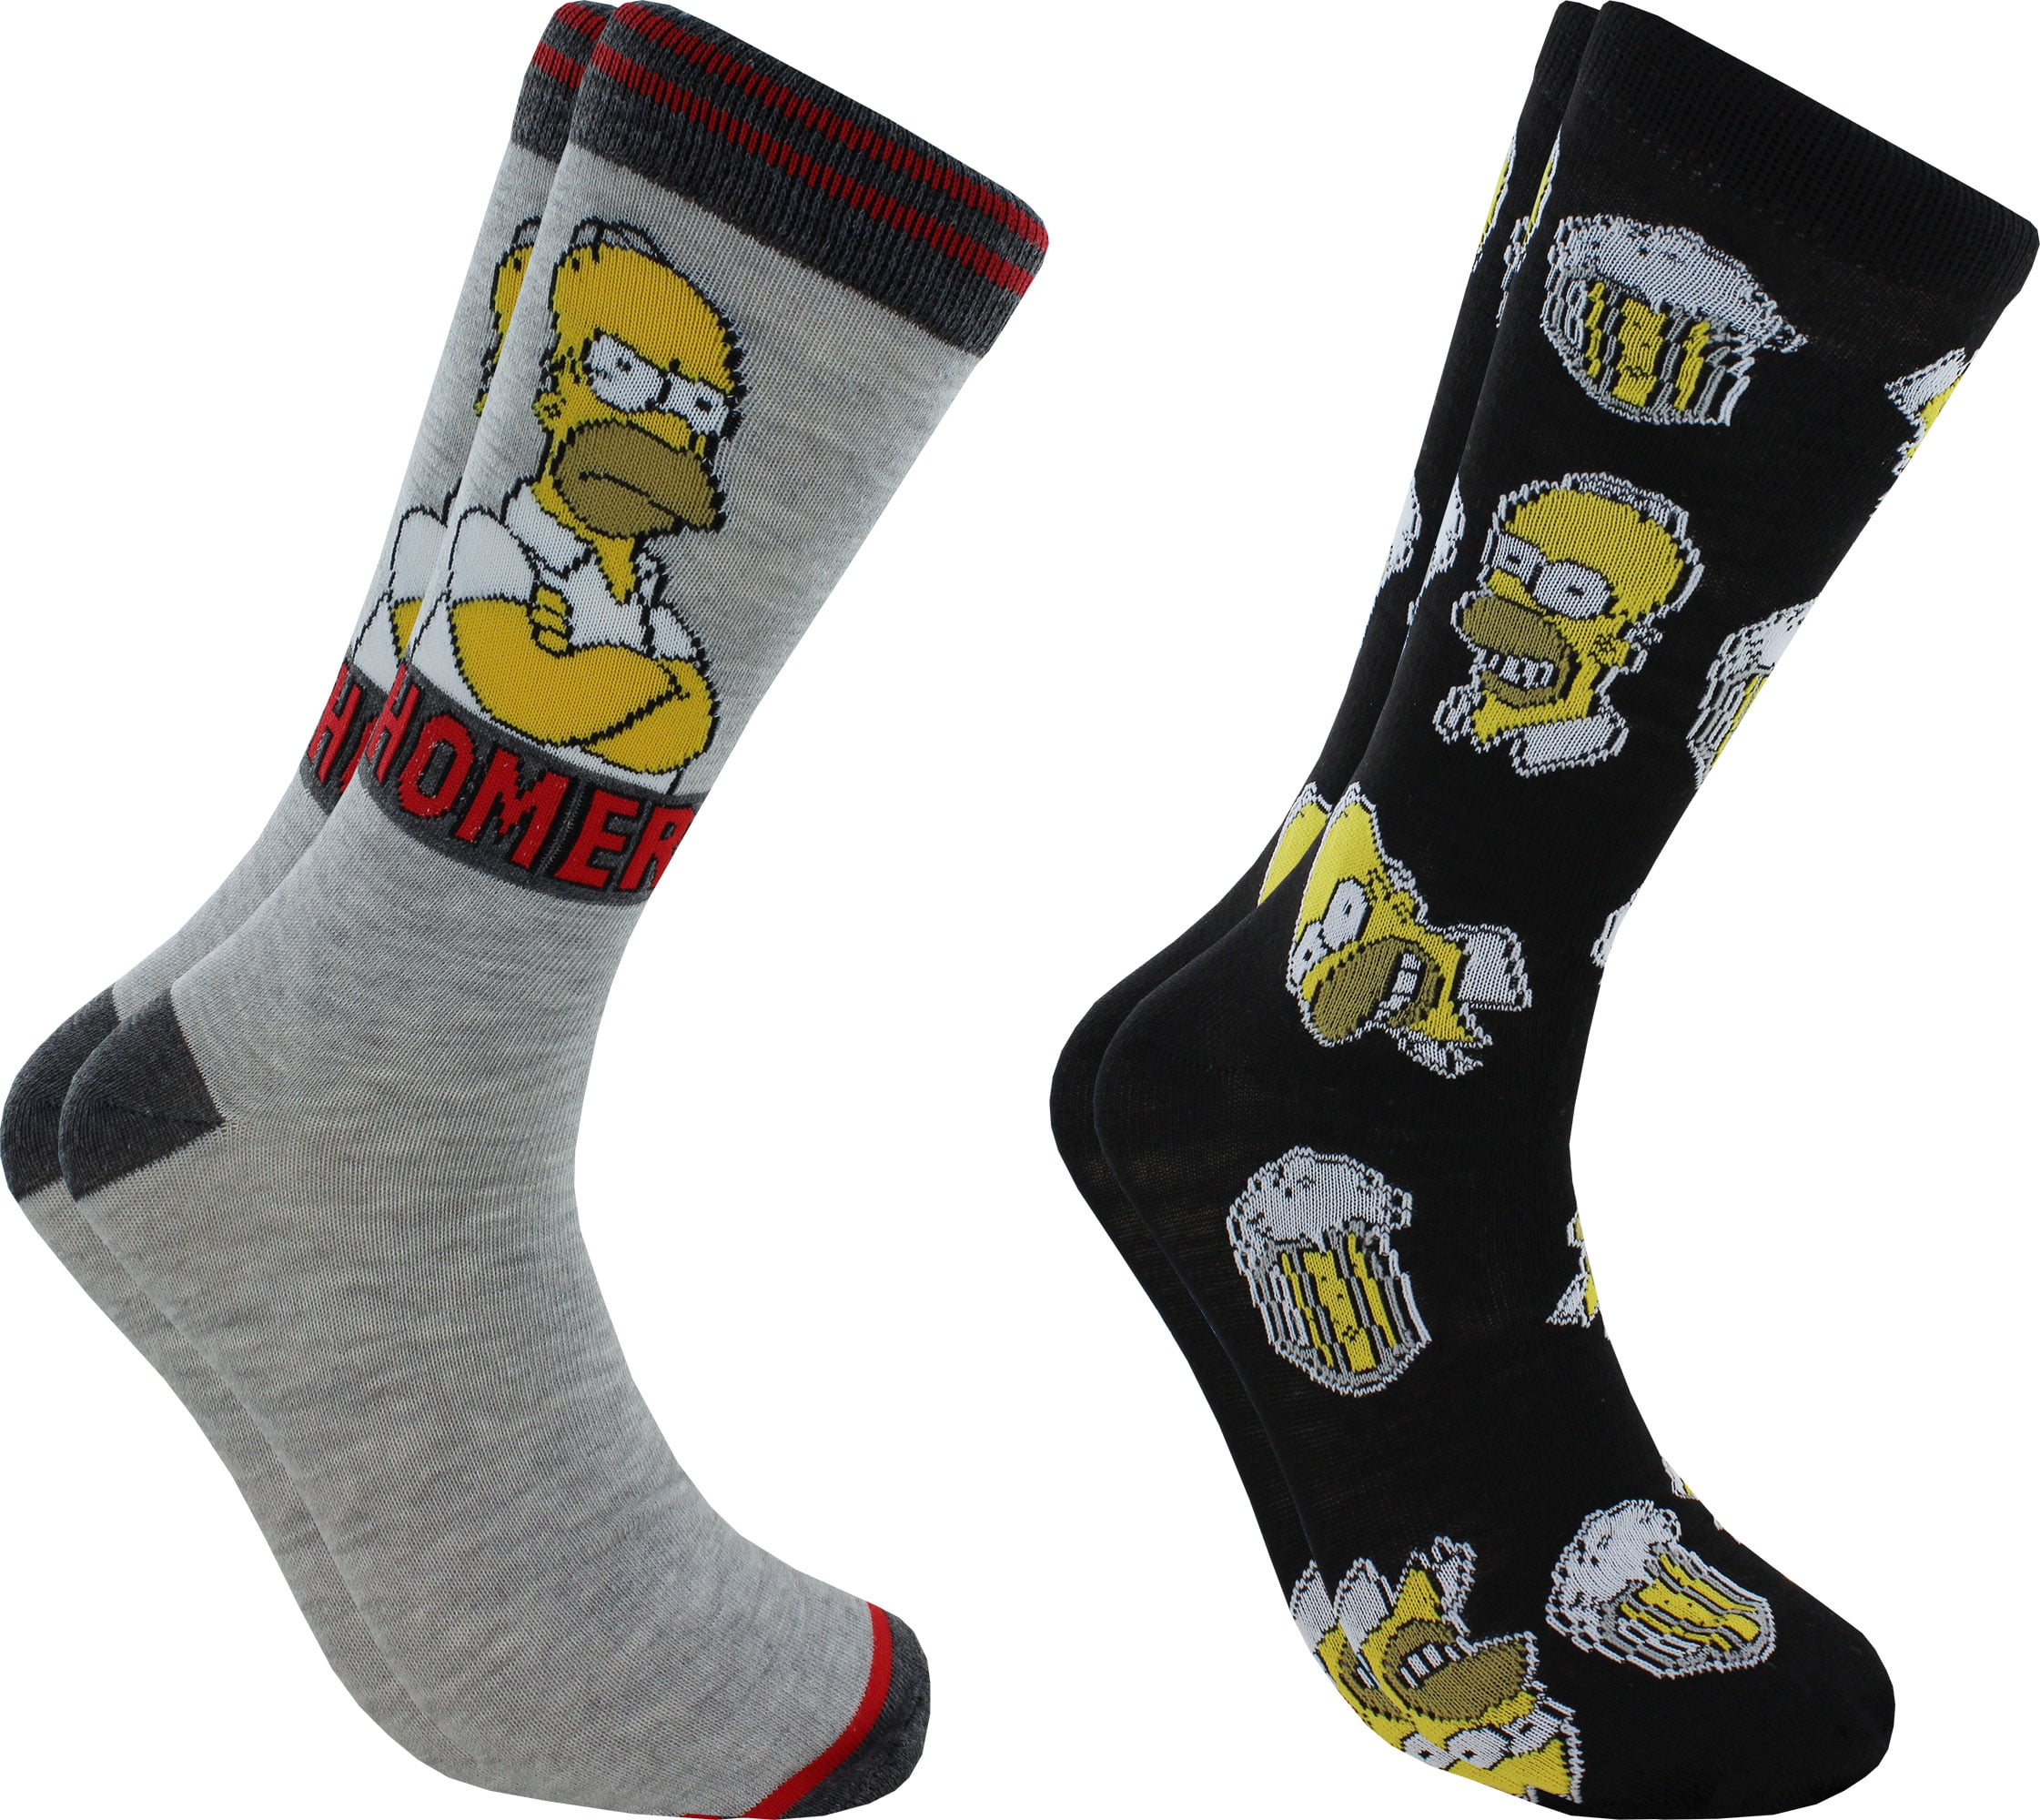 Homer Simpson Socks